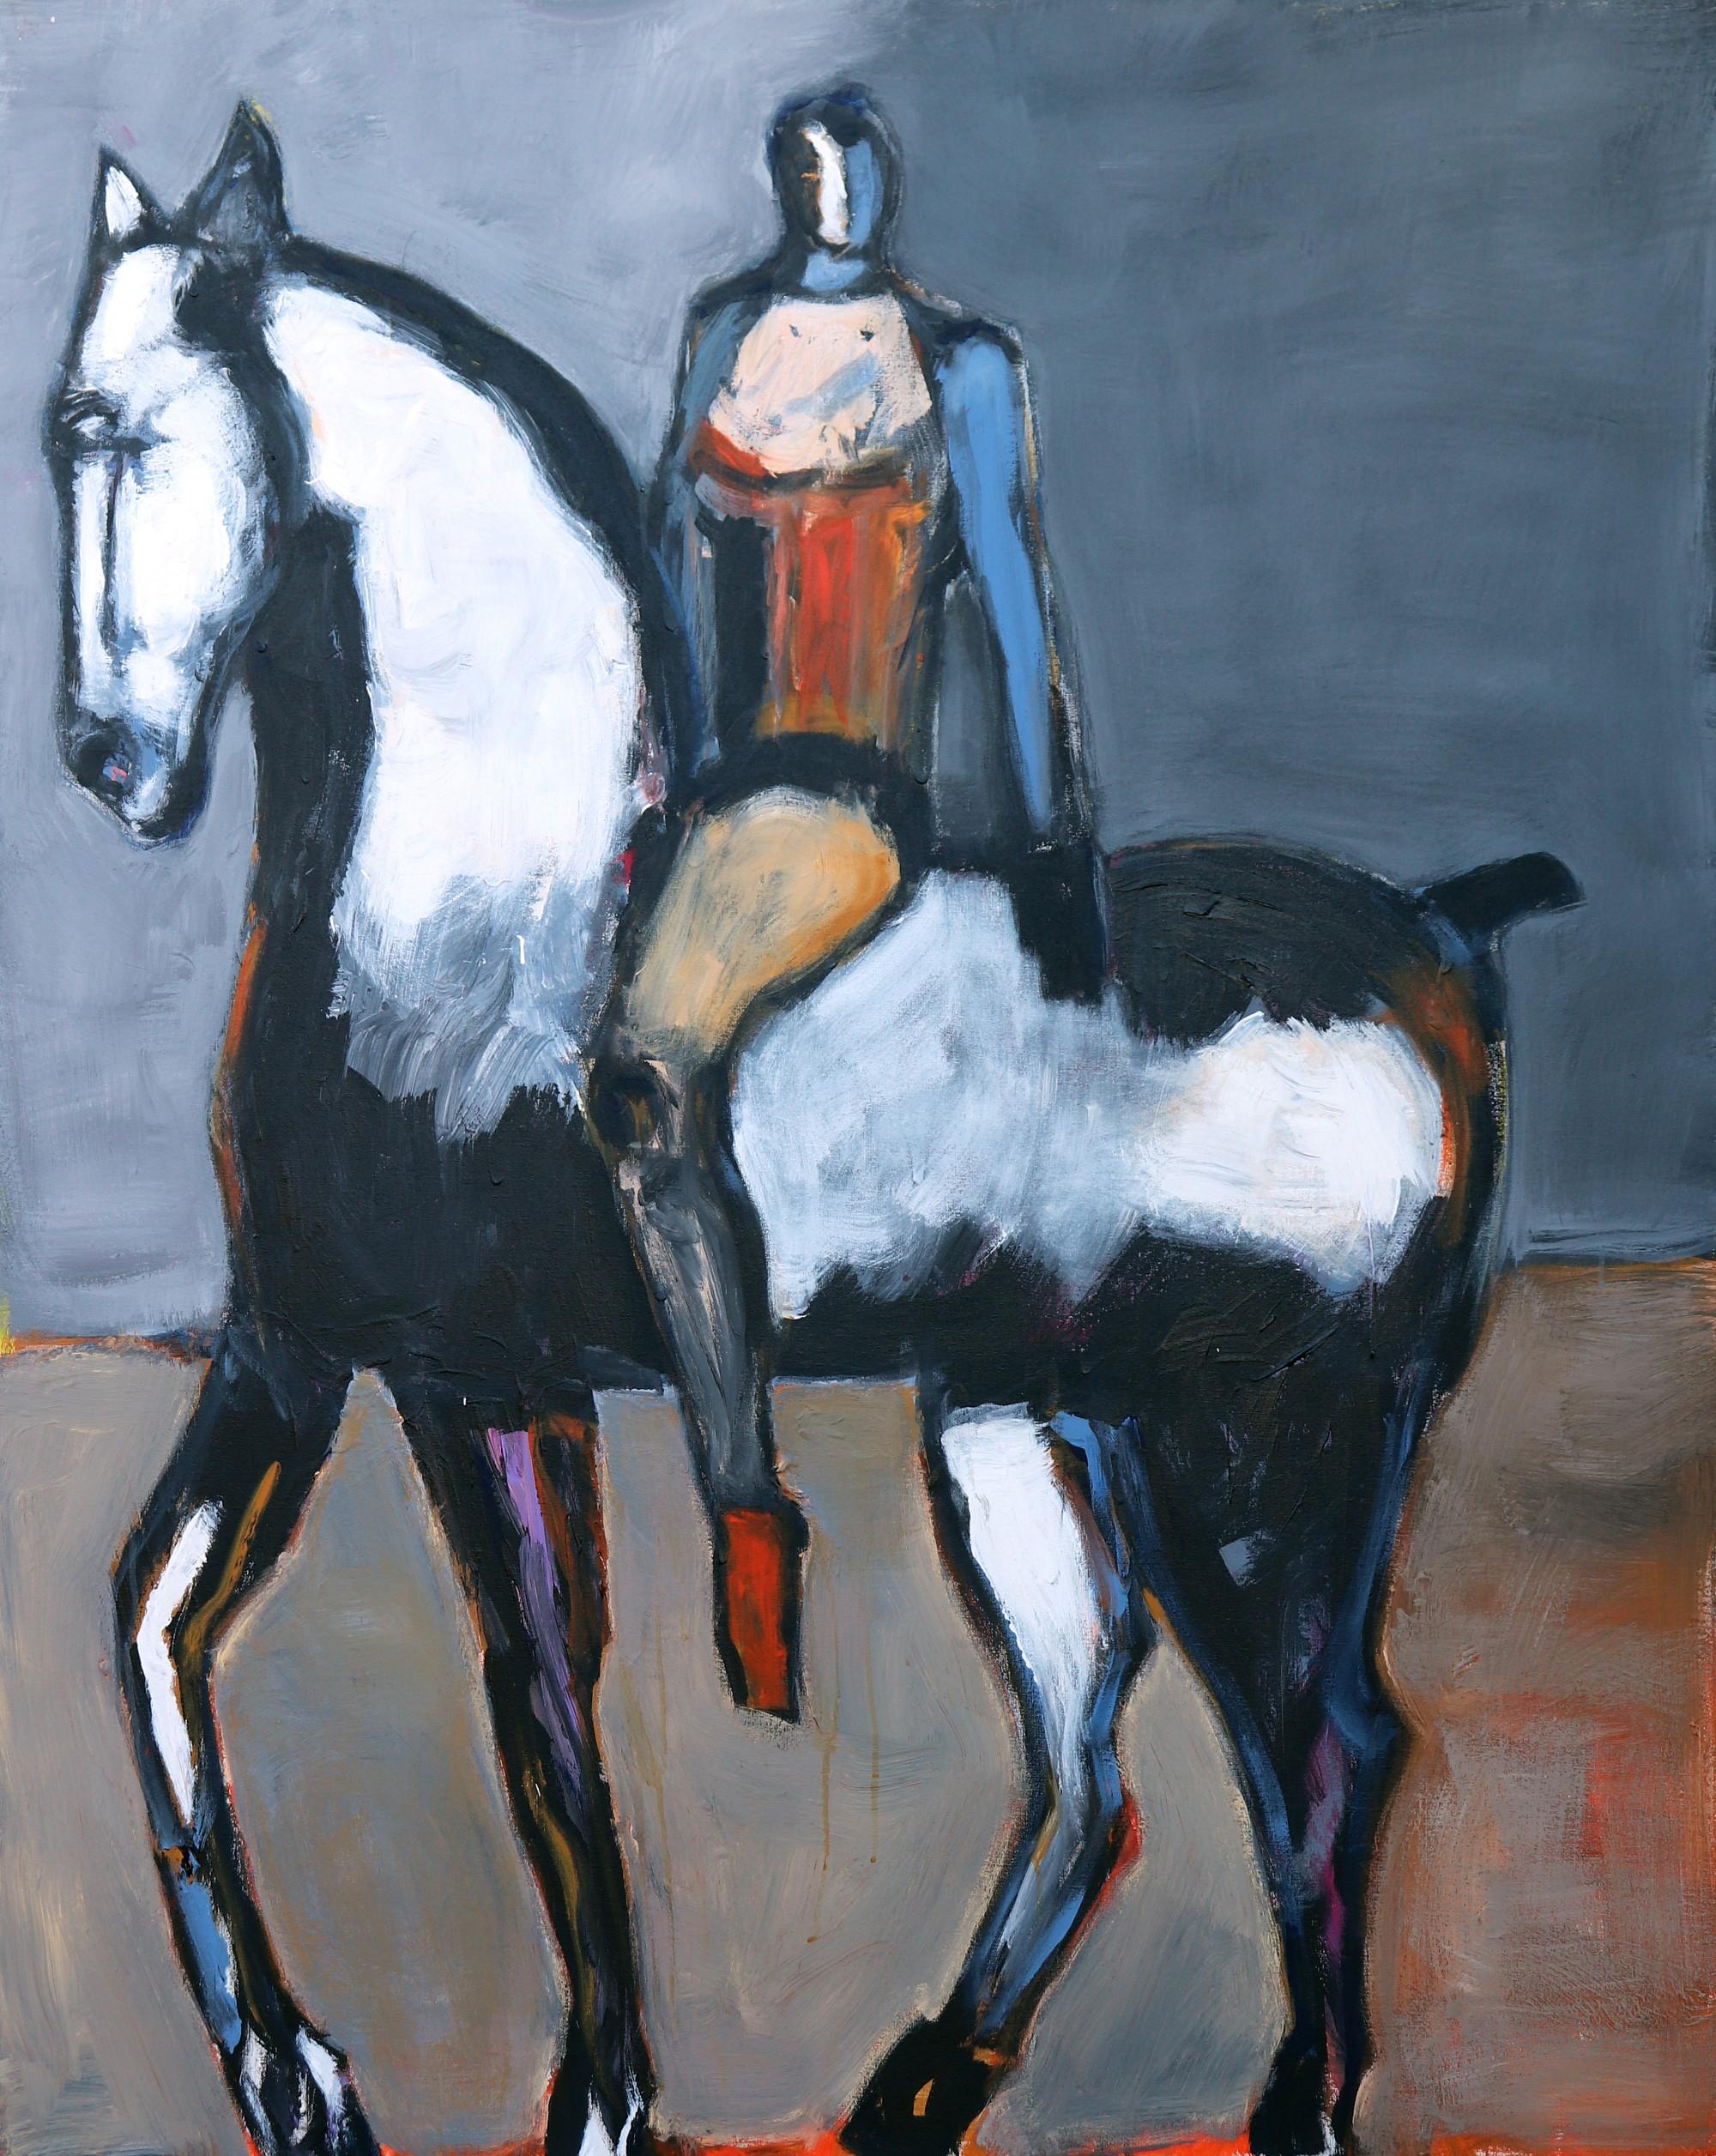 Circus Rider on White Horse lV - Art by James Koskinas